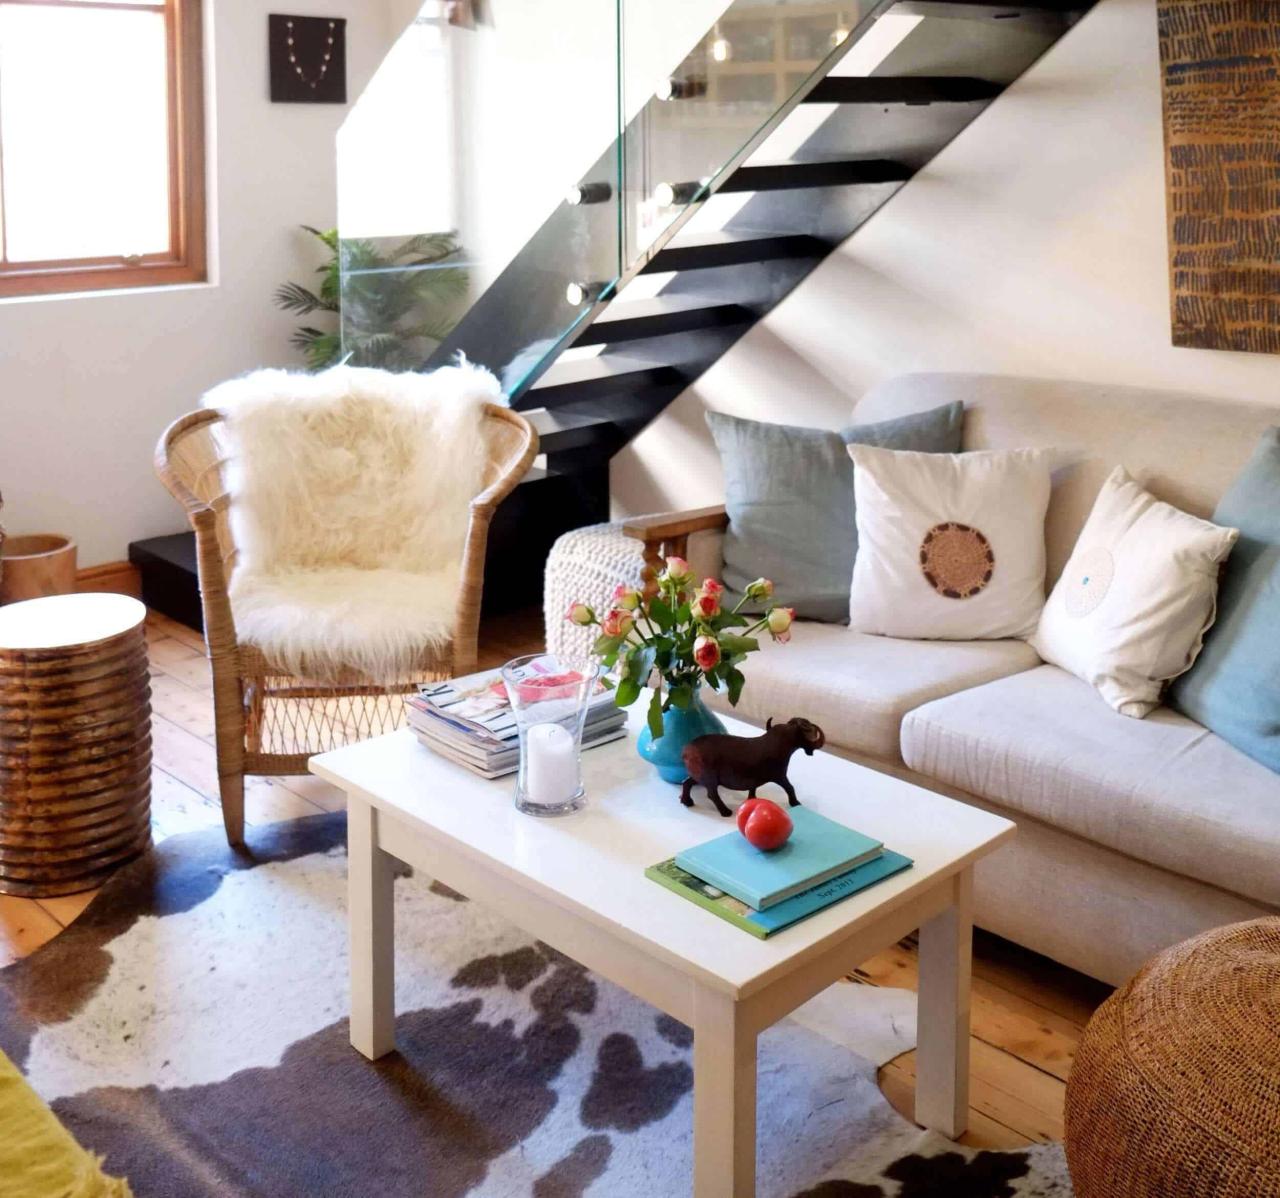 Latest Trends of Small House Interior Design Ideas Live Enhanced